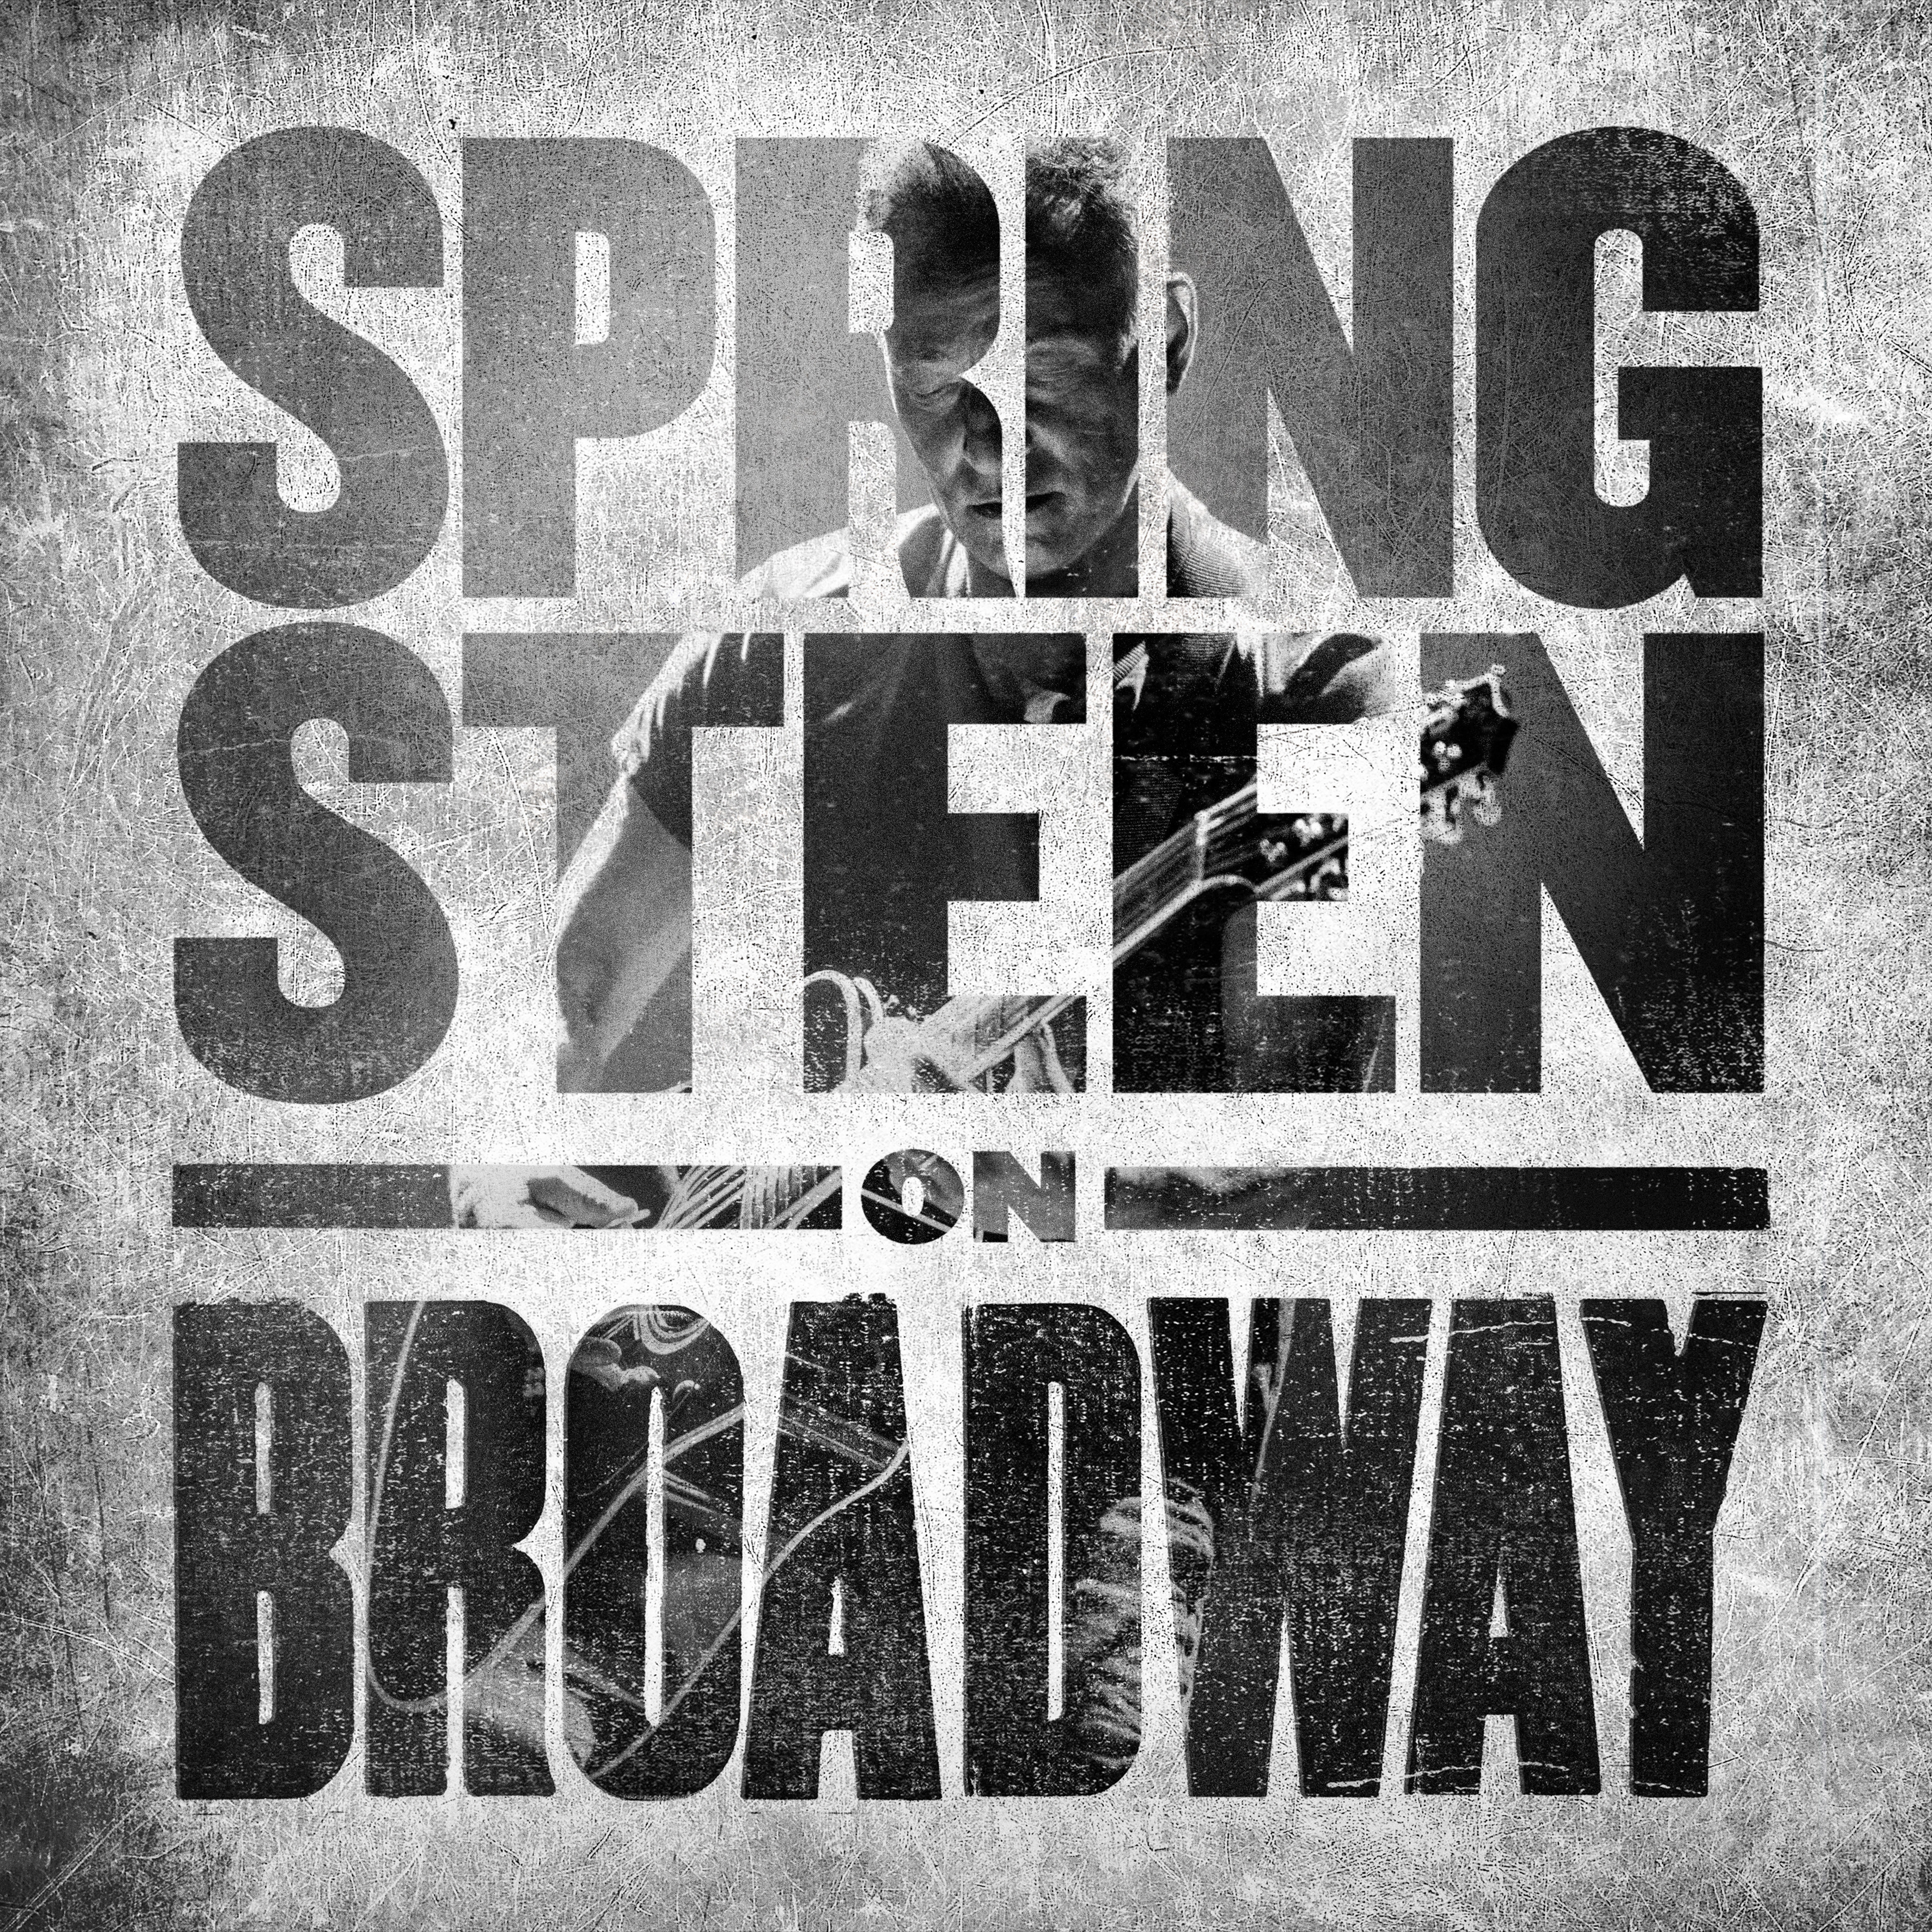 Bruce Springsteen Springsteen - (CD) on Broadway 